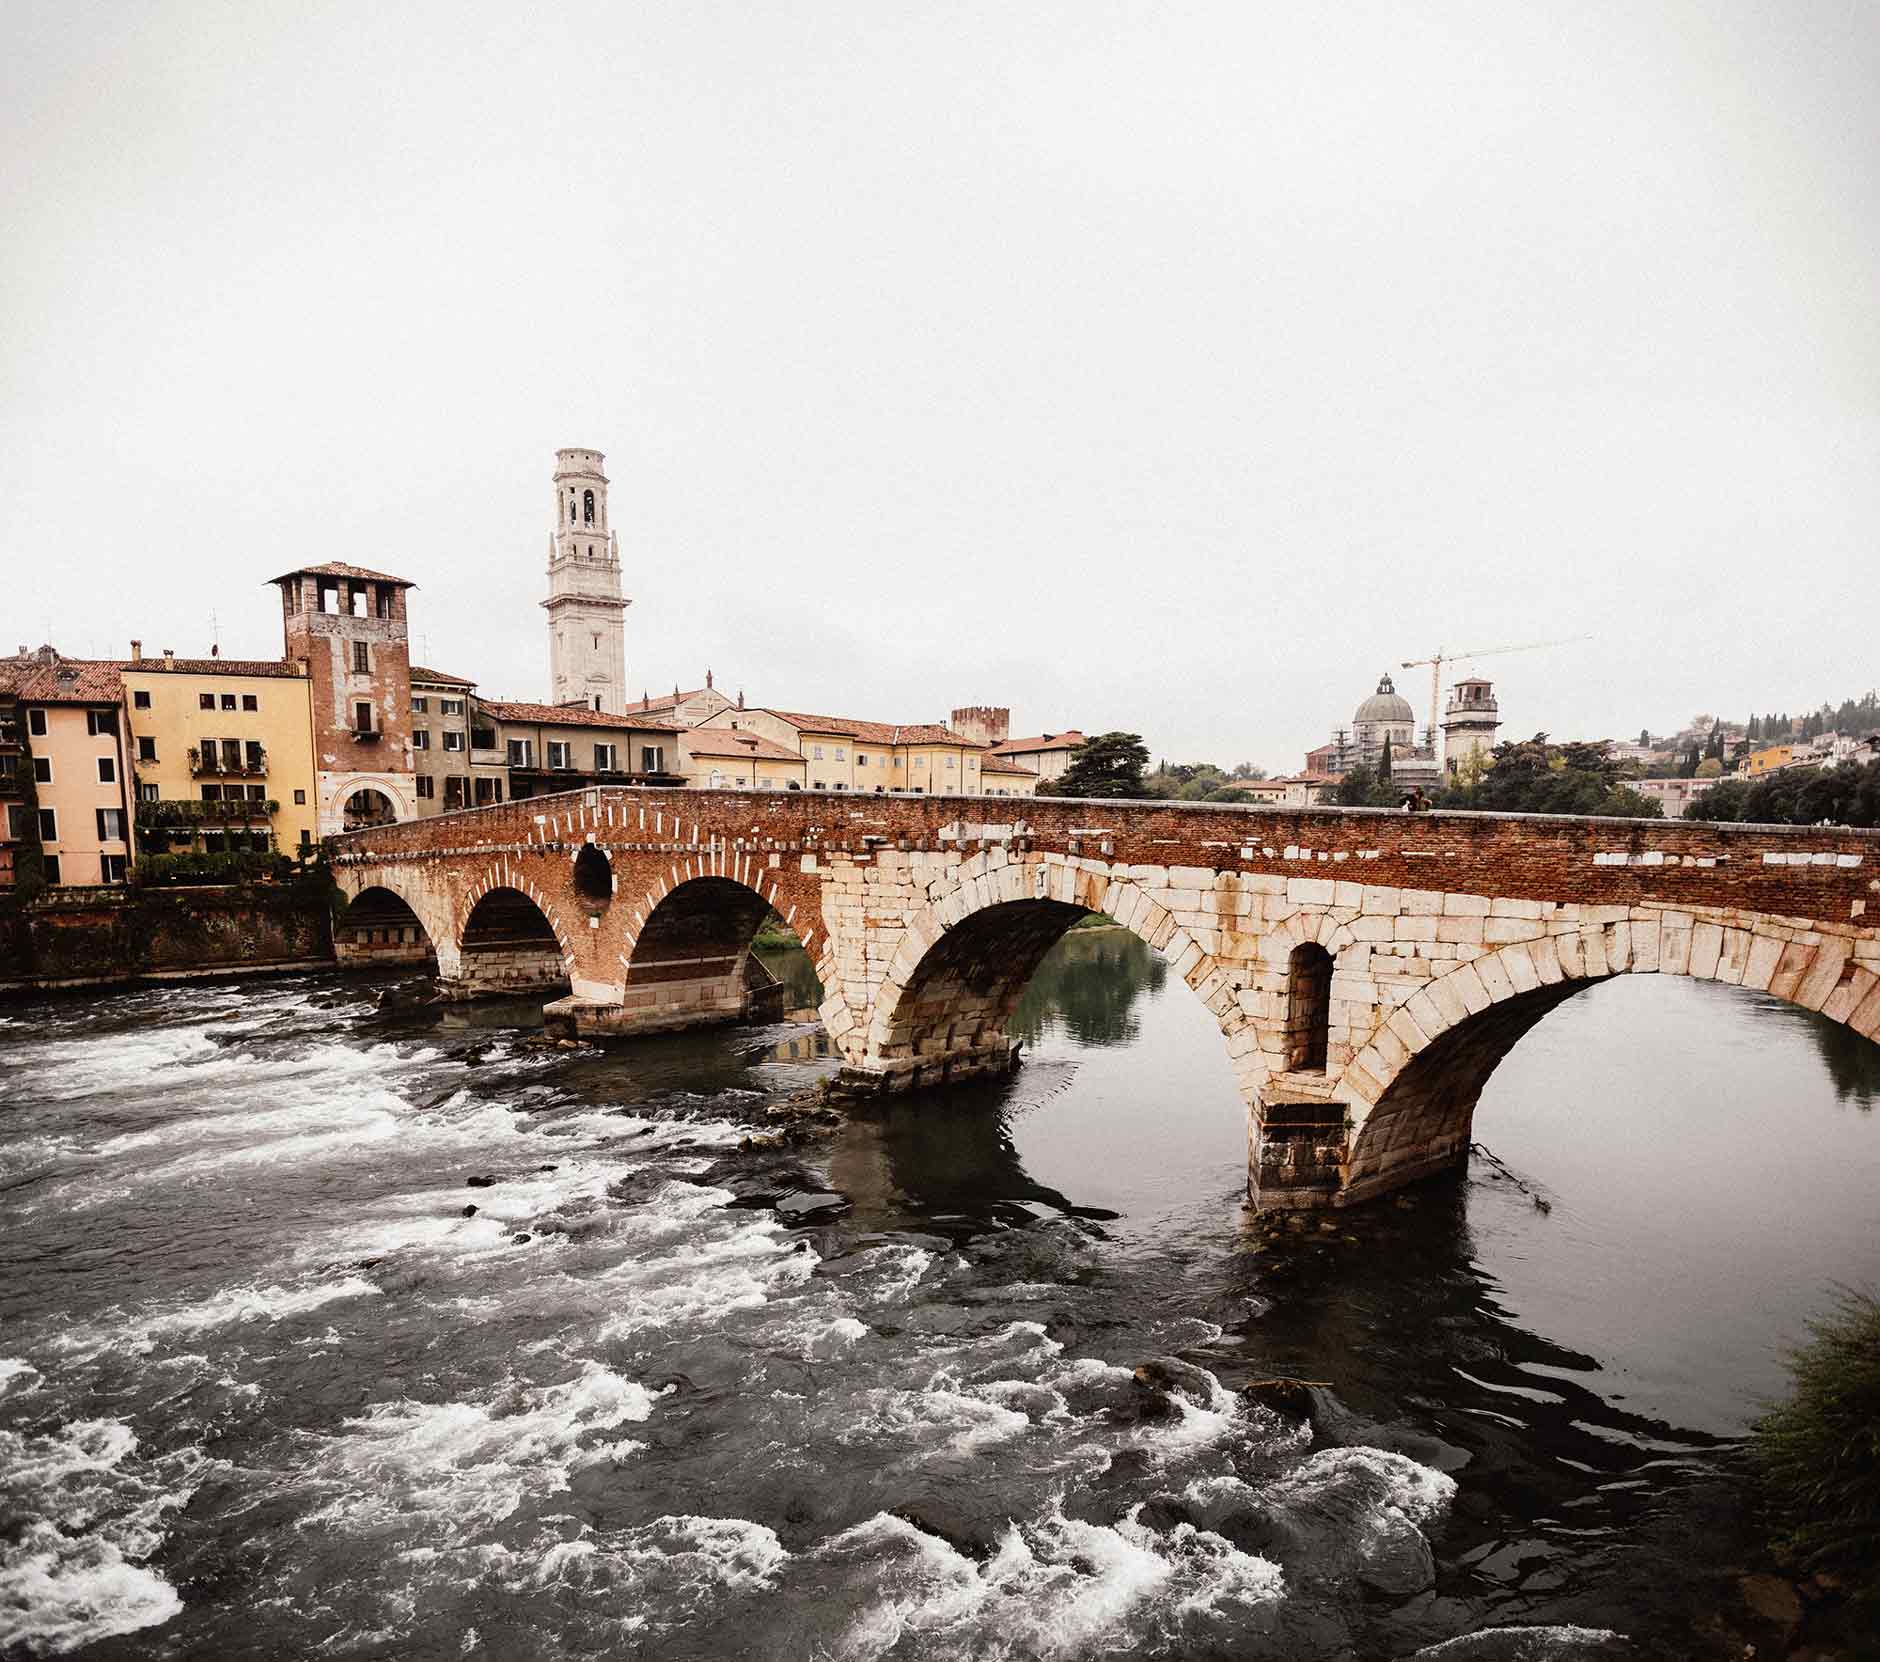 View of a bridge over the Adige River in Verona